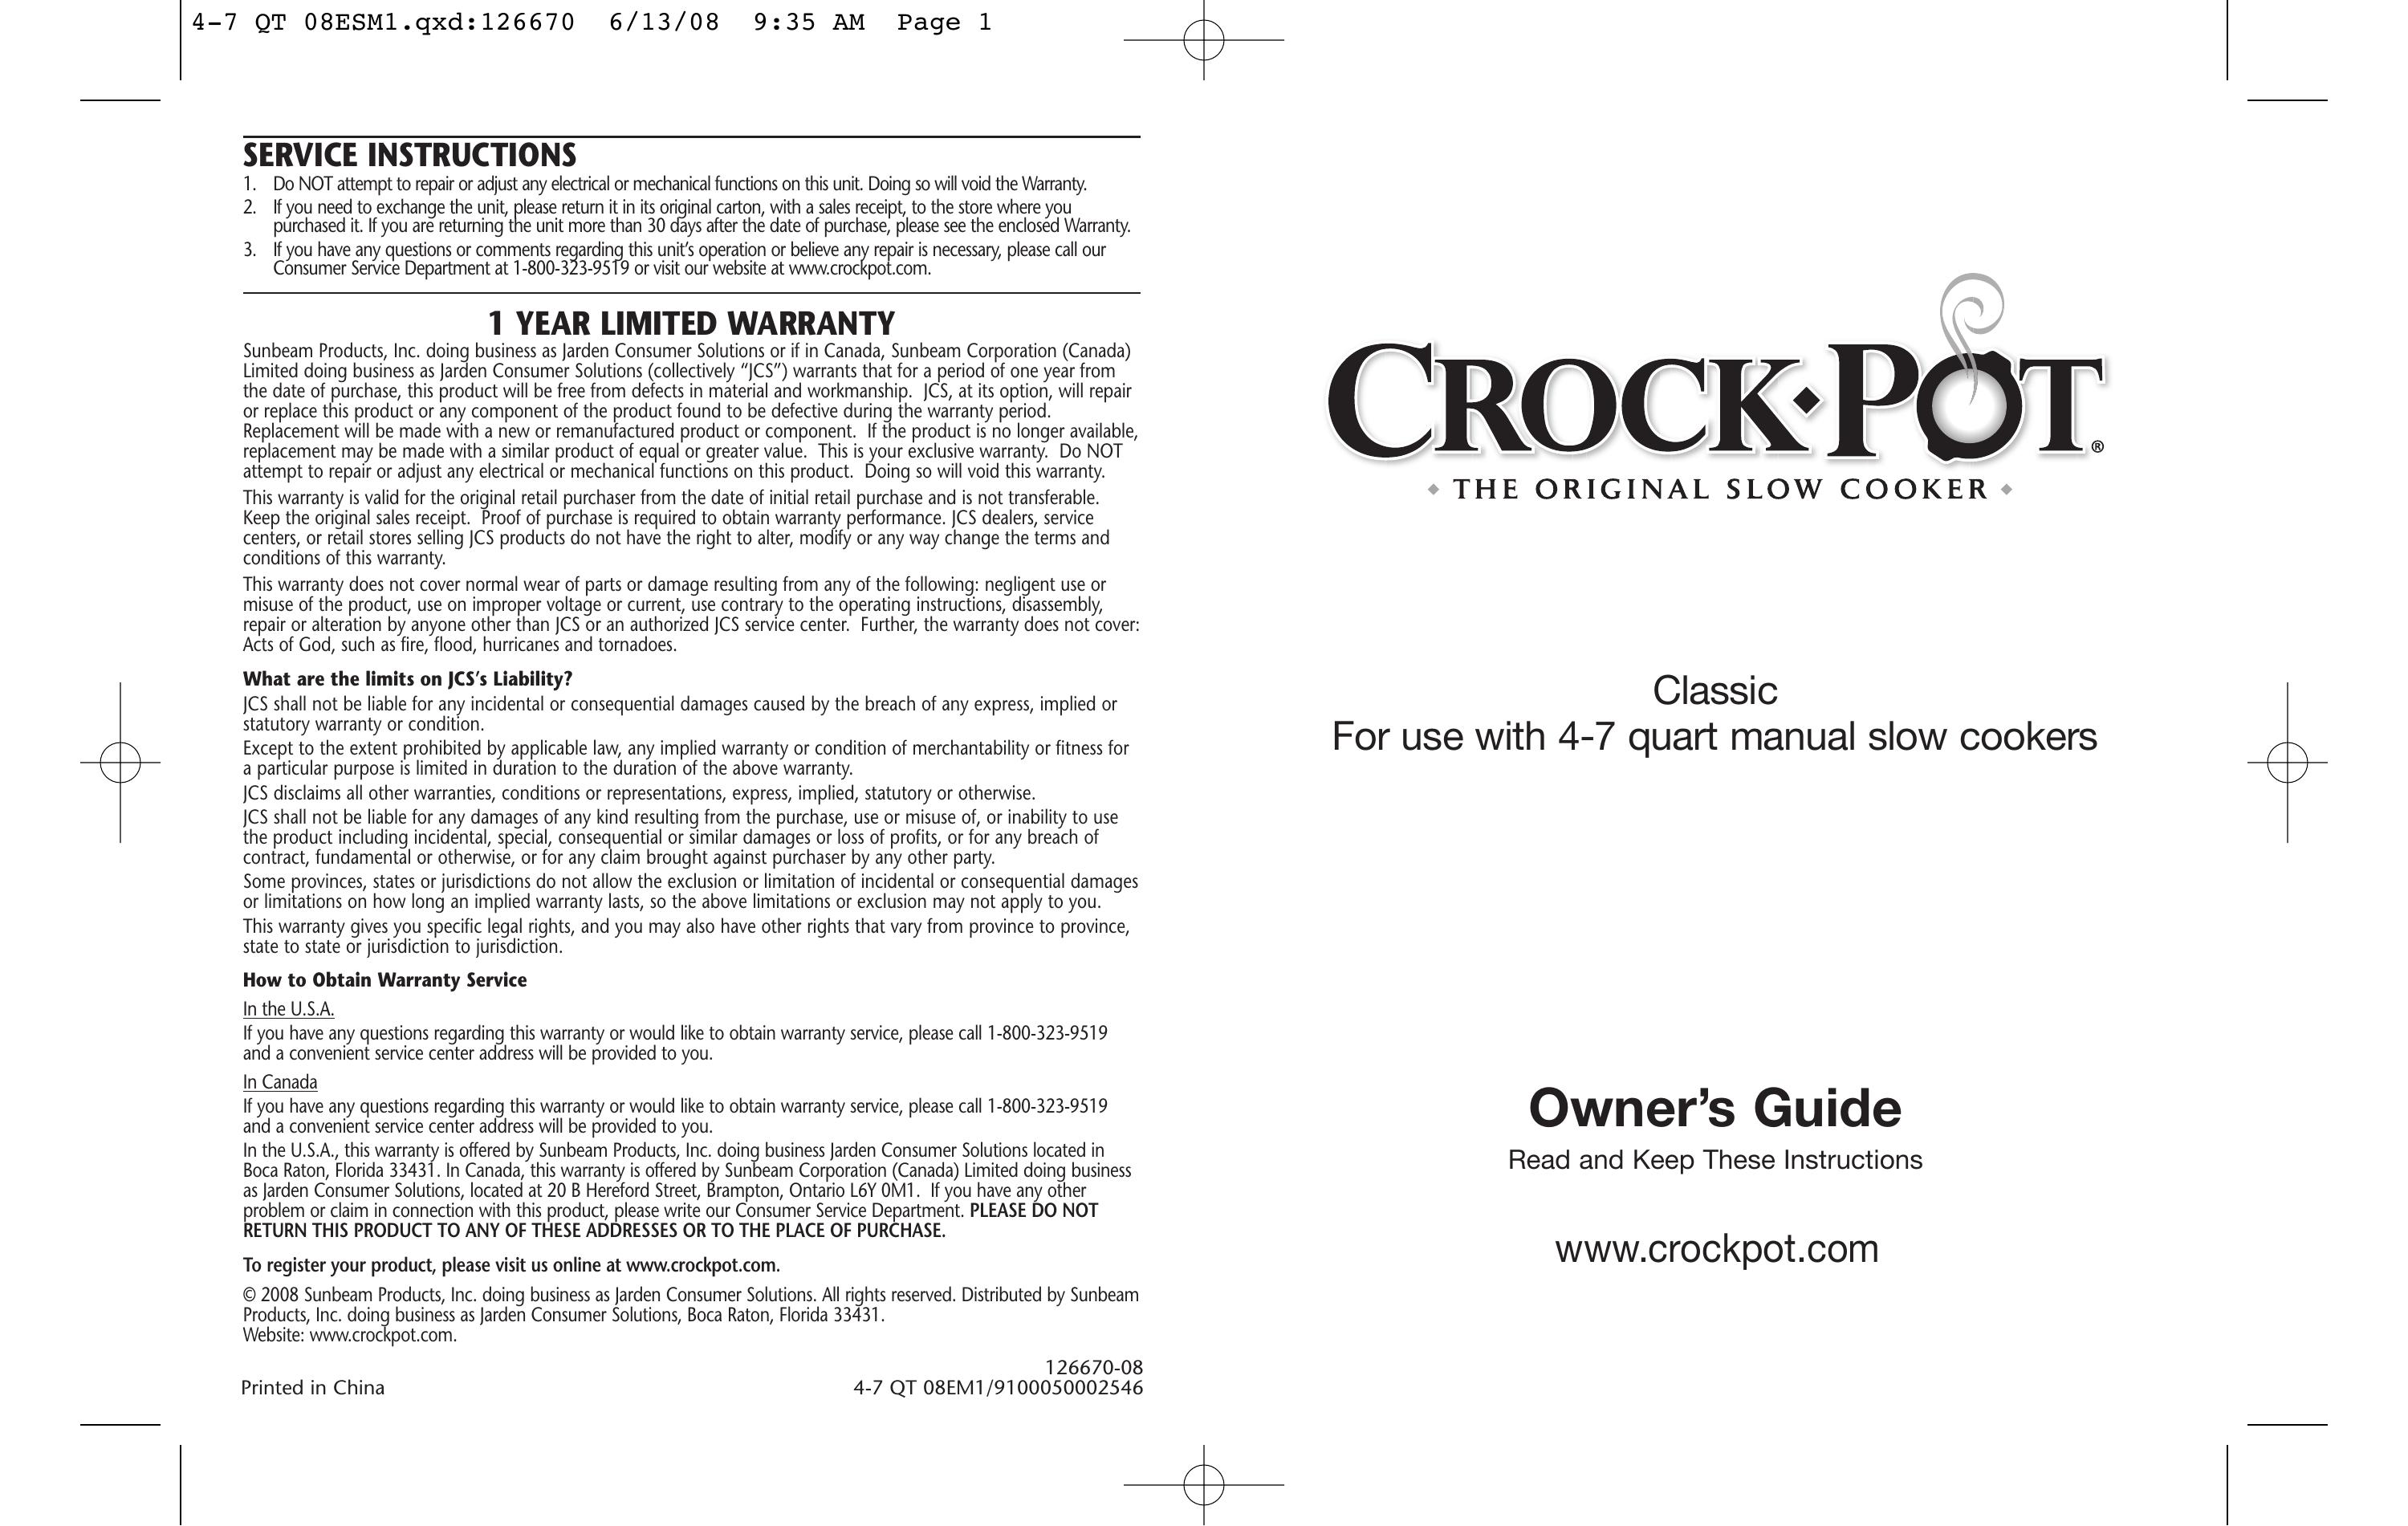 Crock-Pot 126670-08 Slow Cooker User Manual